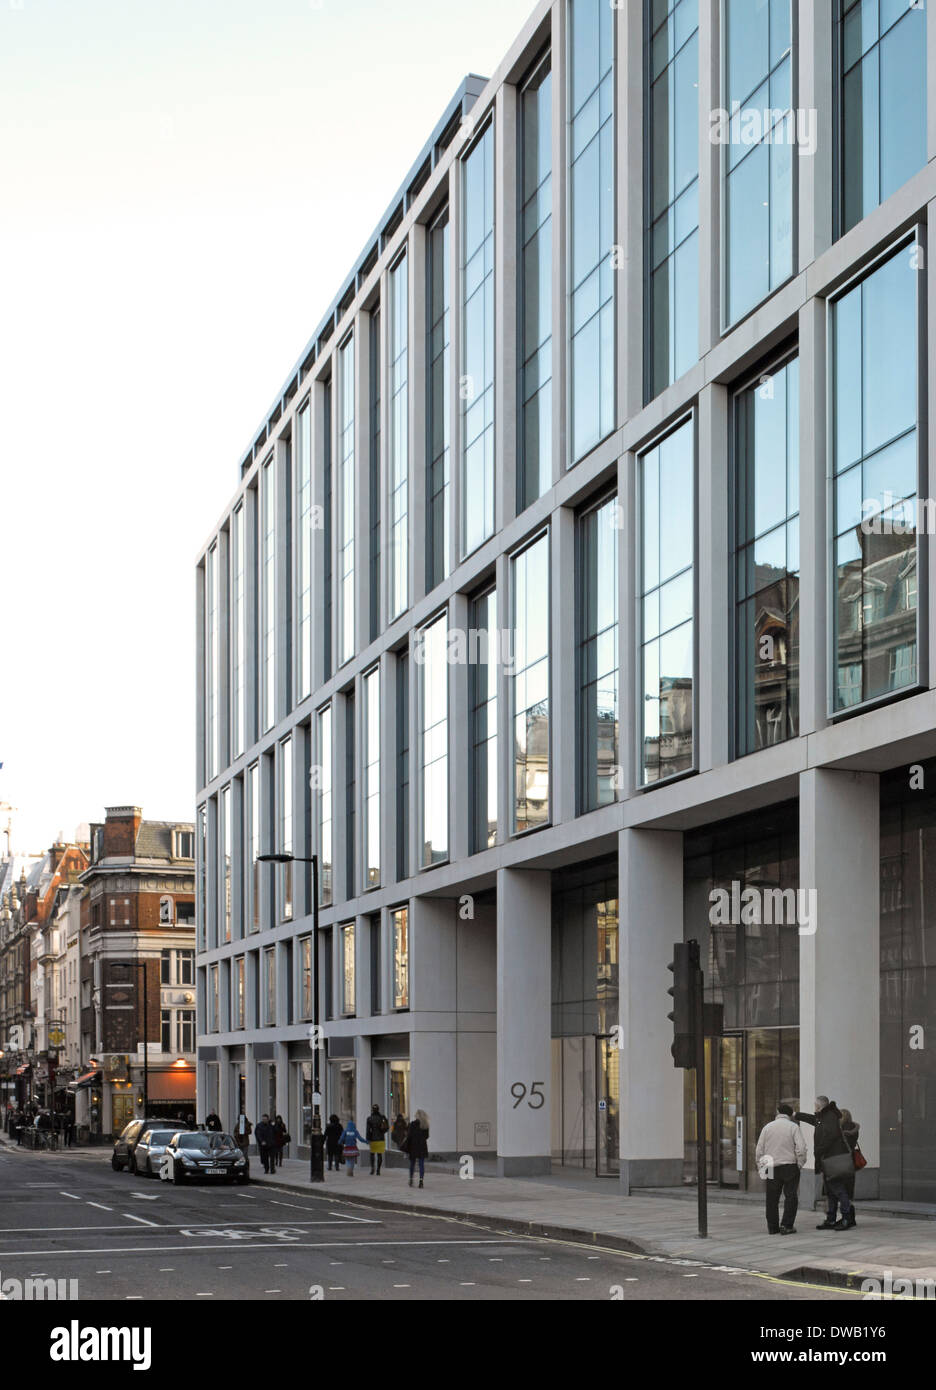 95 WIGMORE STREET, London, United Kingdom. Architect: ORMS Architecture Design, 2013. Overall exterior view. Stock Photo